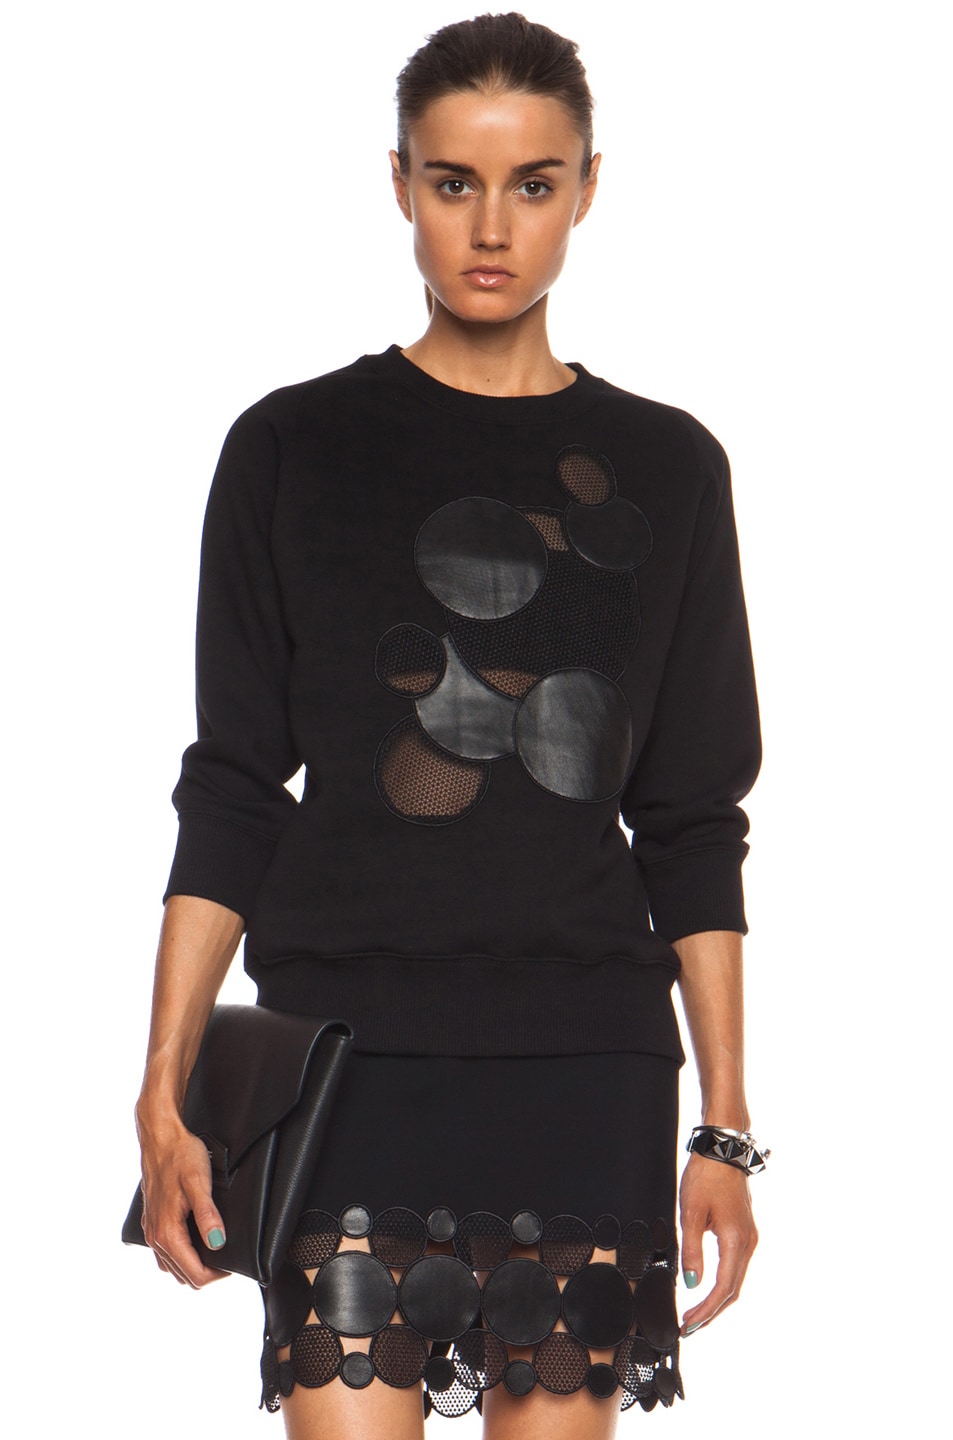 Christopher Kane Molecule Motif Cotton-Blend Sweatshirt in Black | FWRD